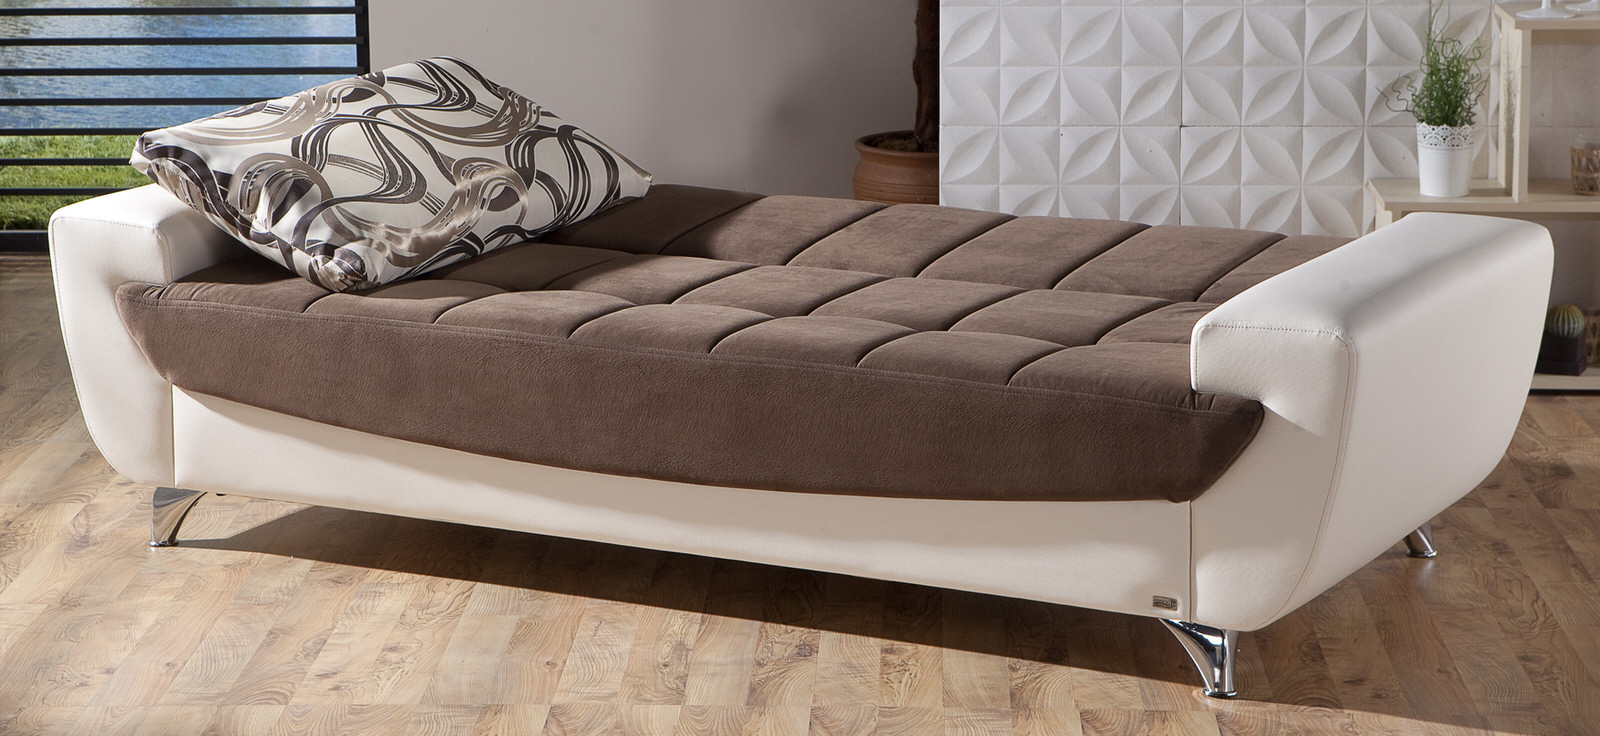 high quality sofa beds